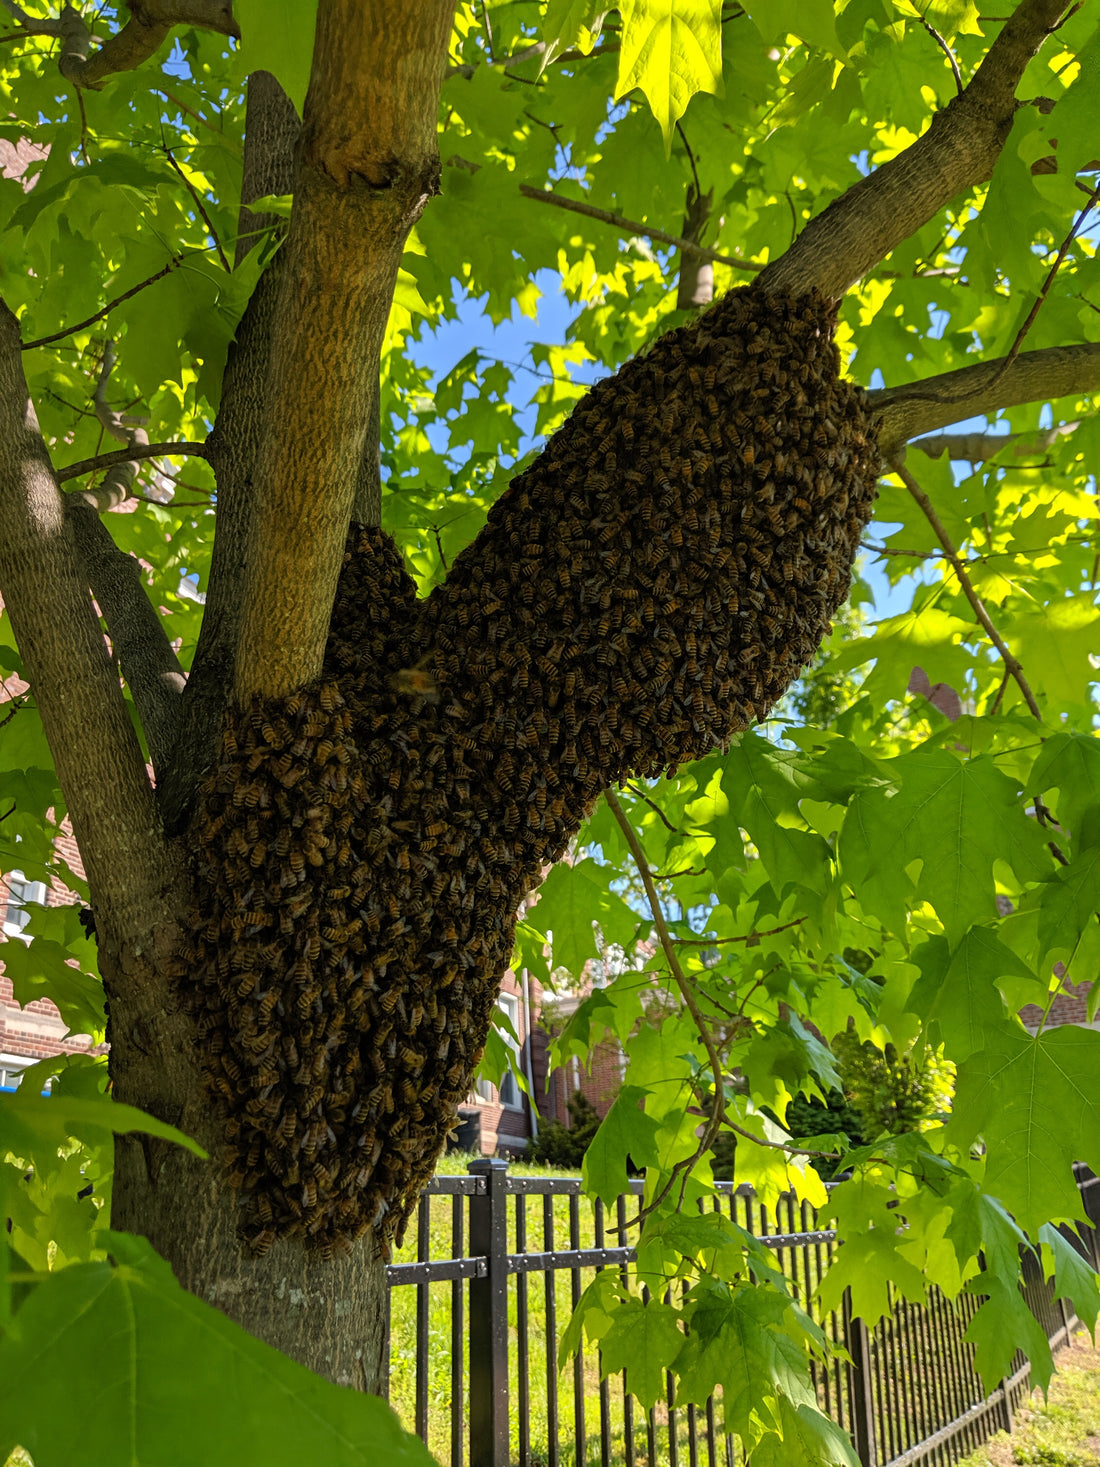 Why do honeybees swarm?